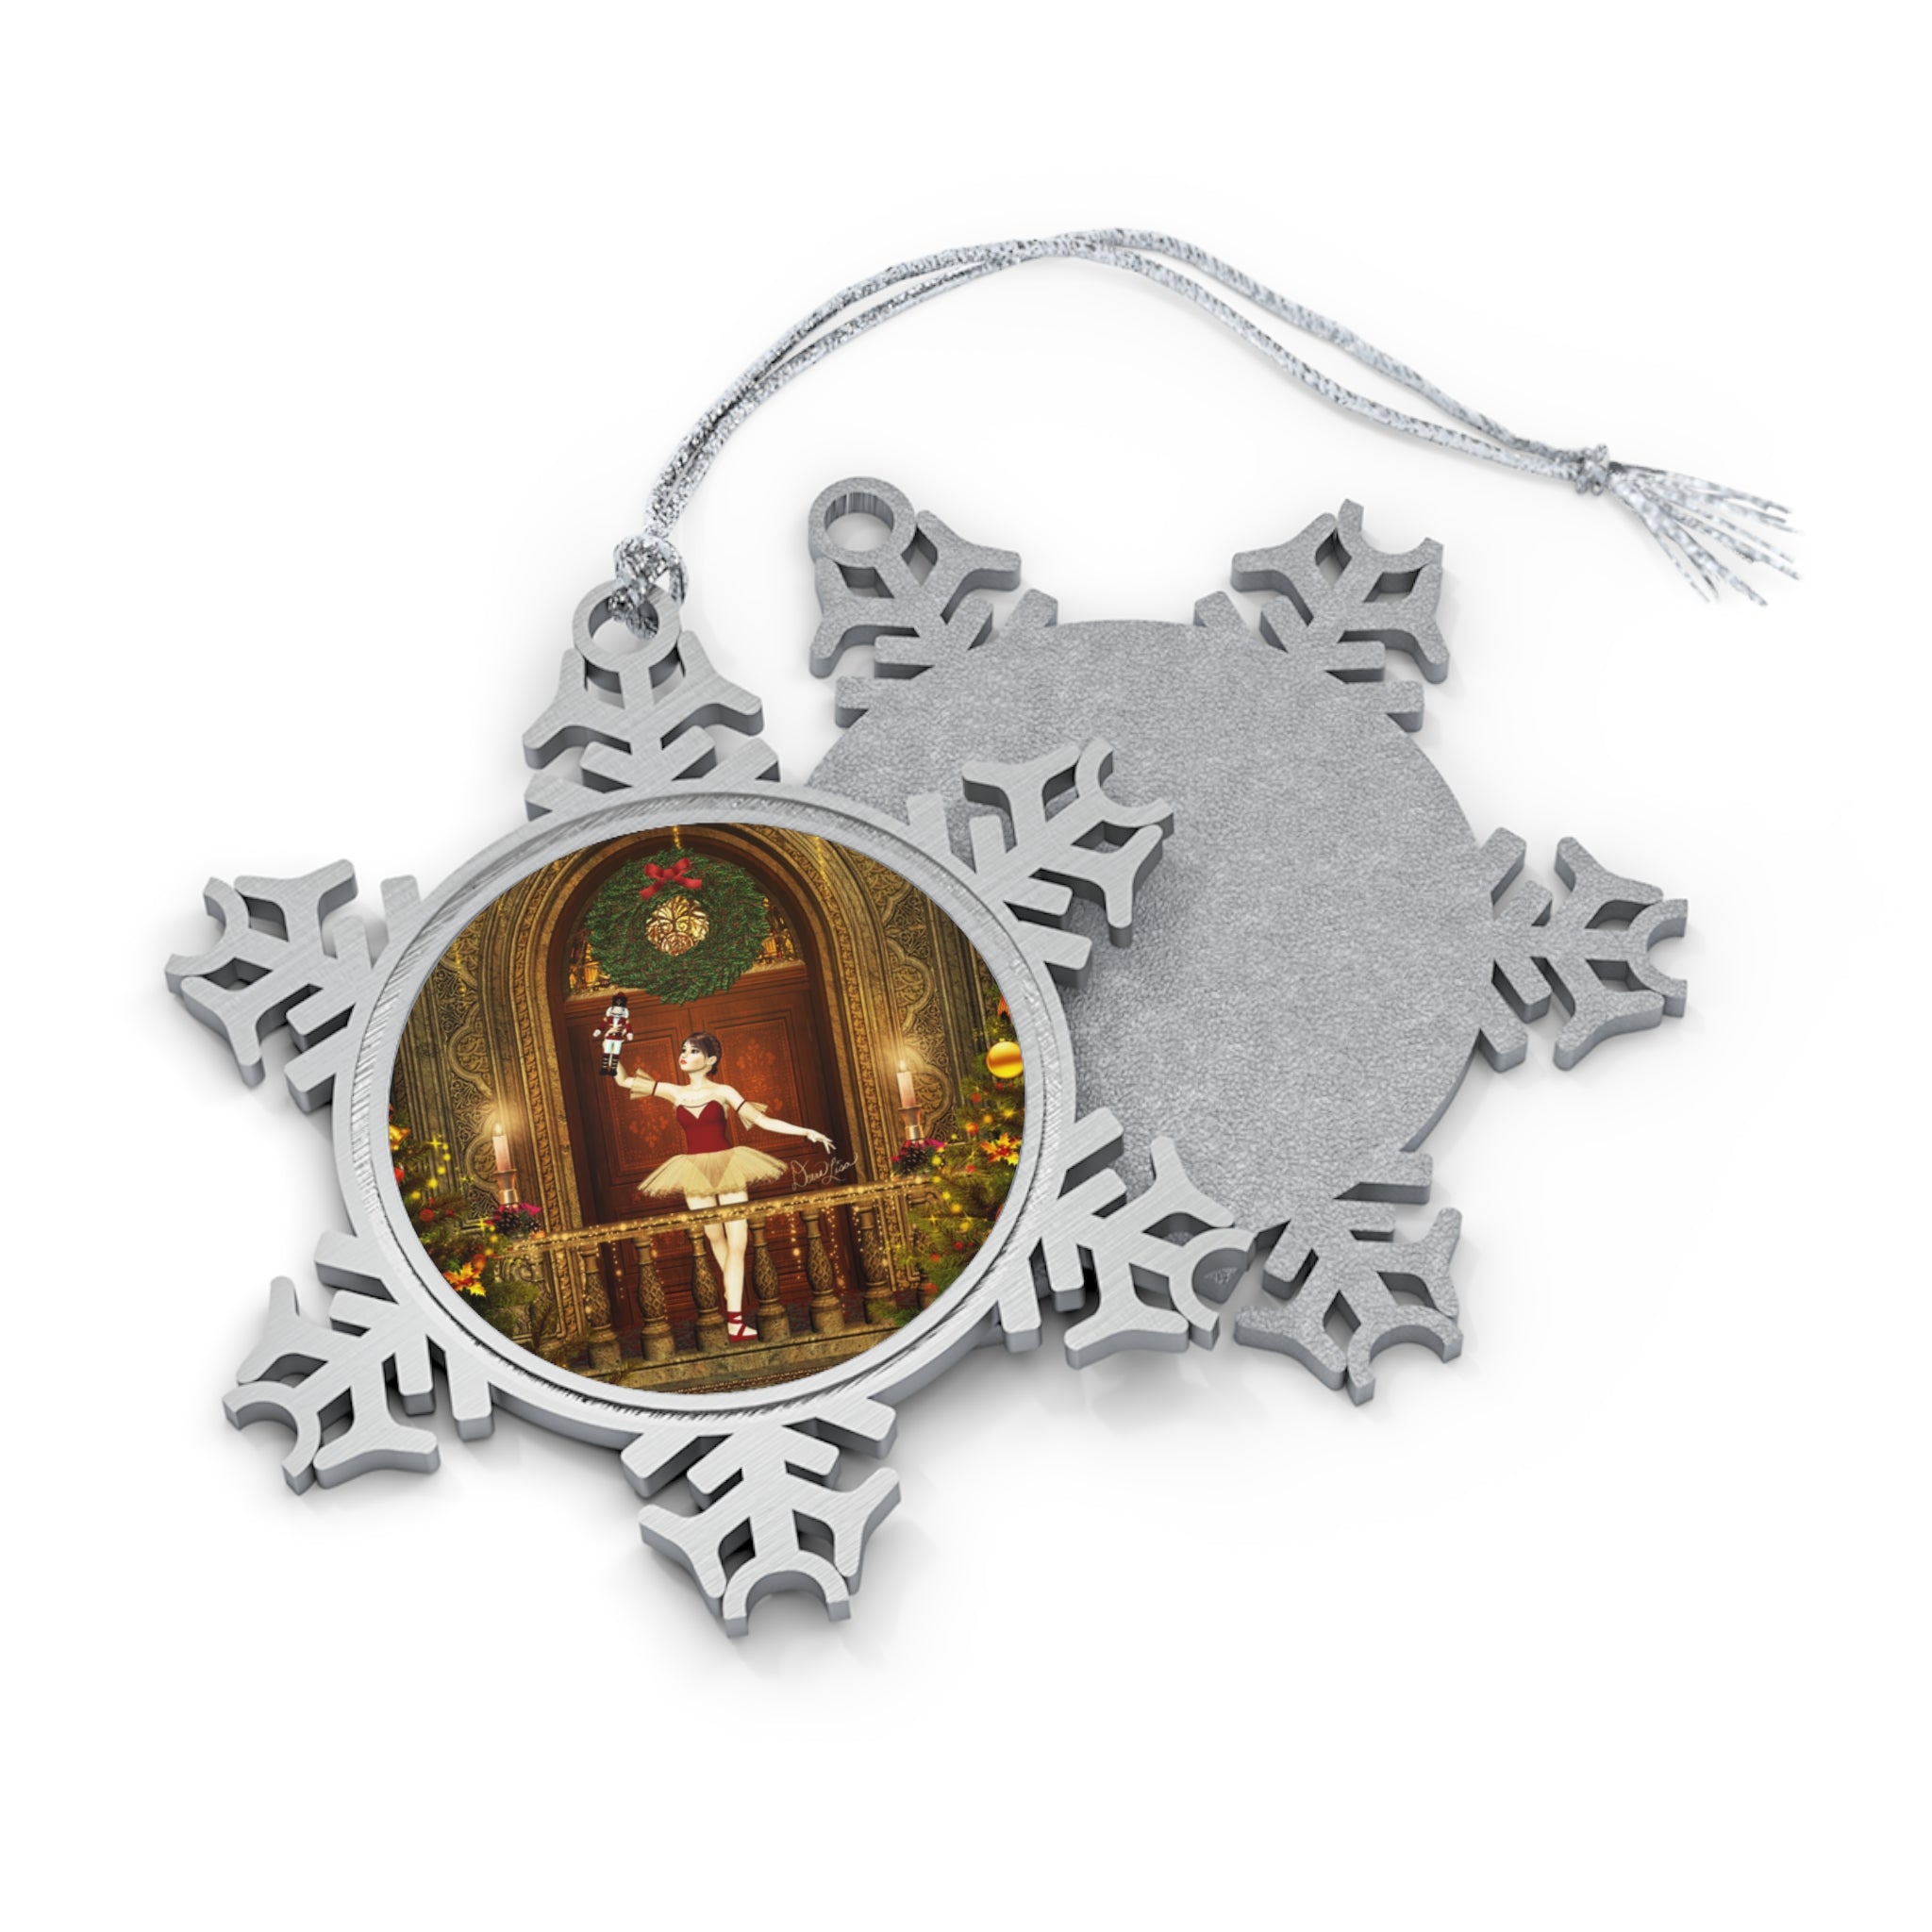 Nutcracker Ballerina Art Pewter Snowflake Ornament by Artist Donna Lisa